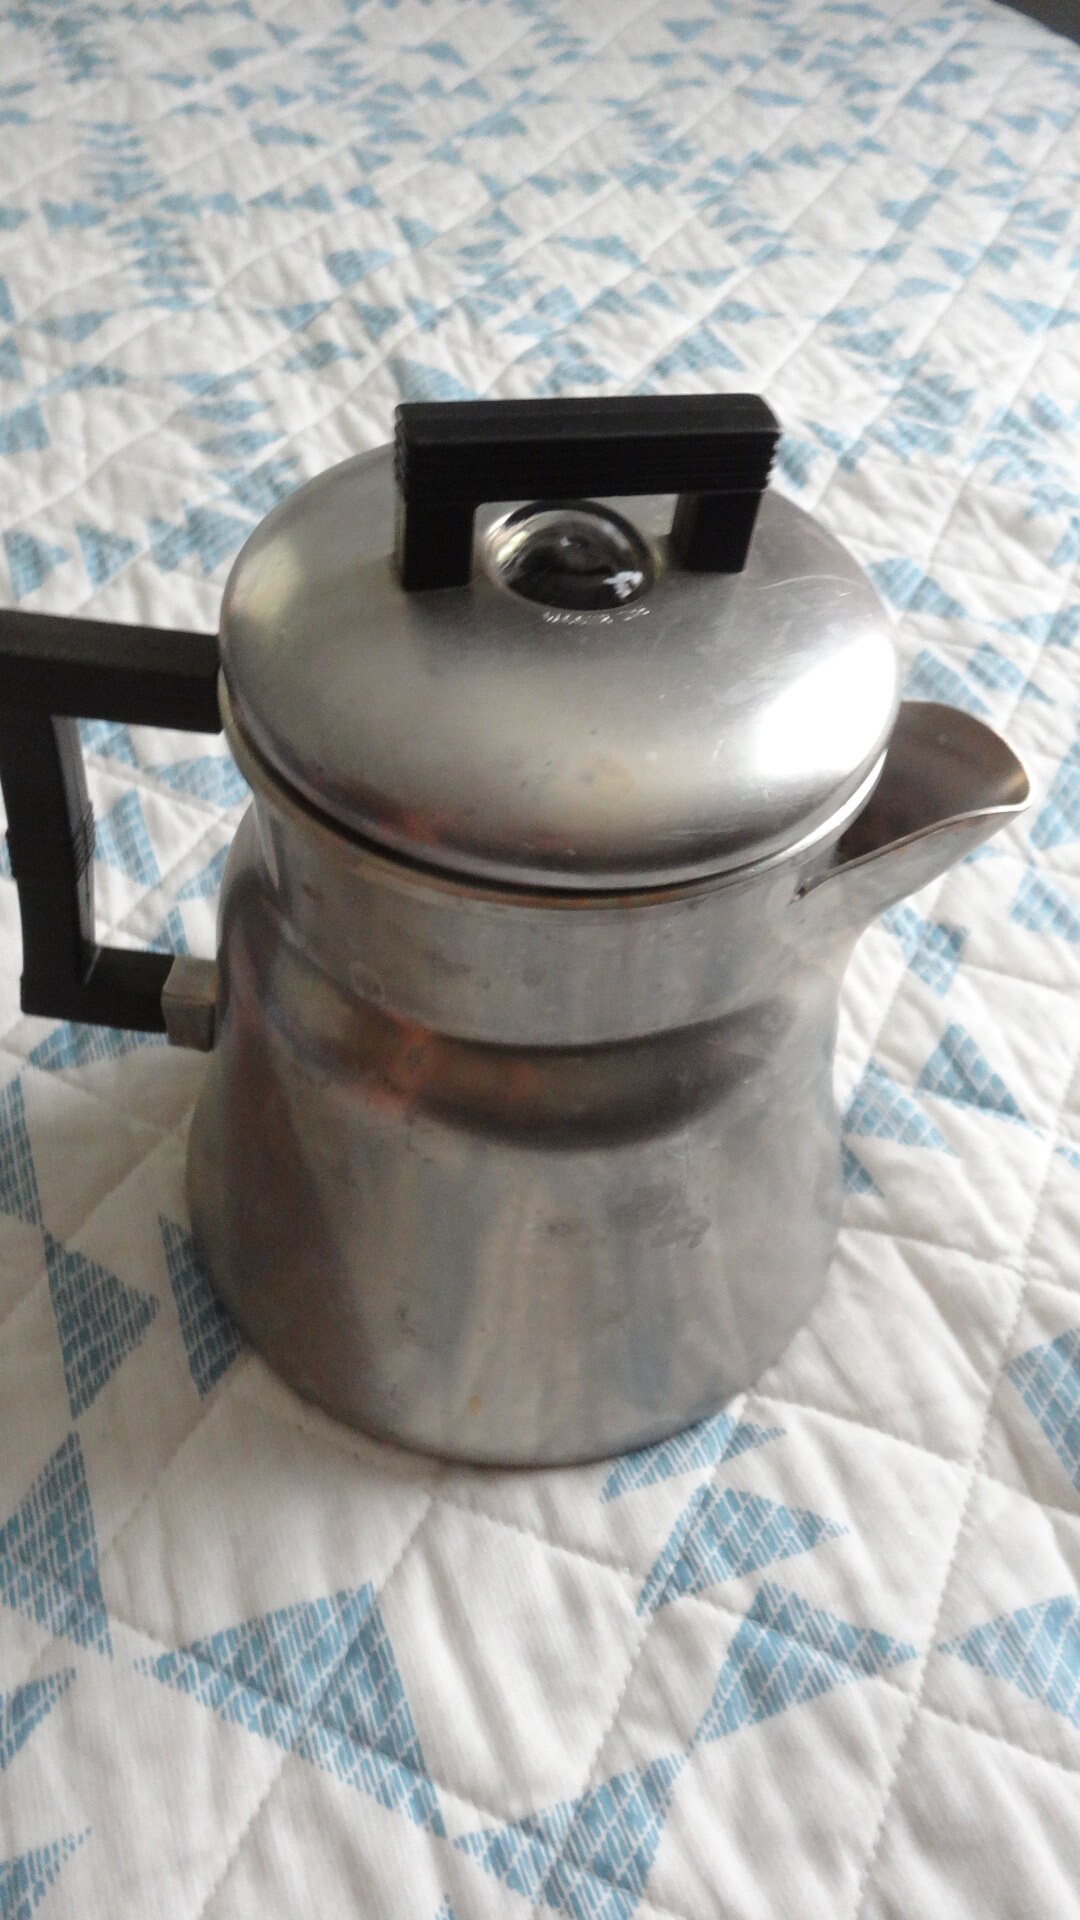 Vintage Wear-ever 3046 Aluminum Coffee Pot 6 Cup Pot Drip Percolator Camping